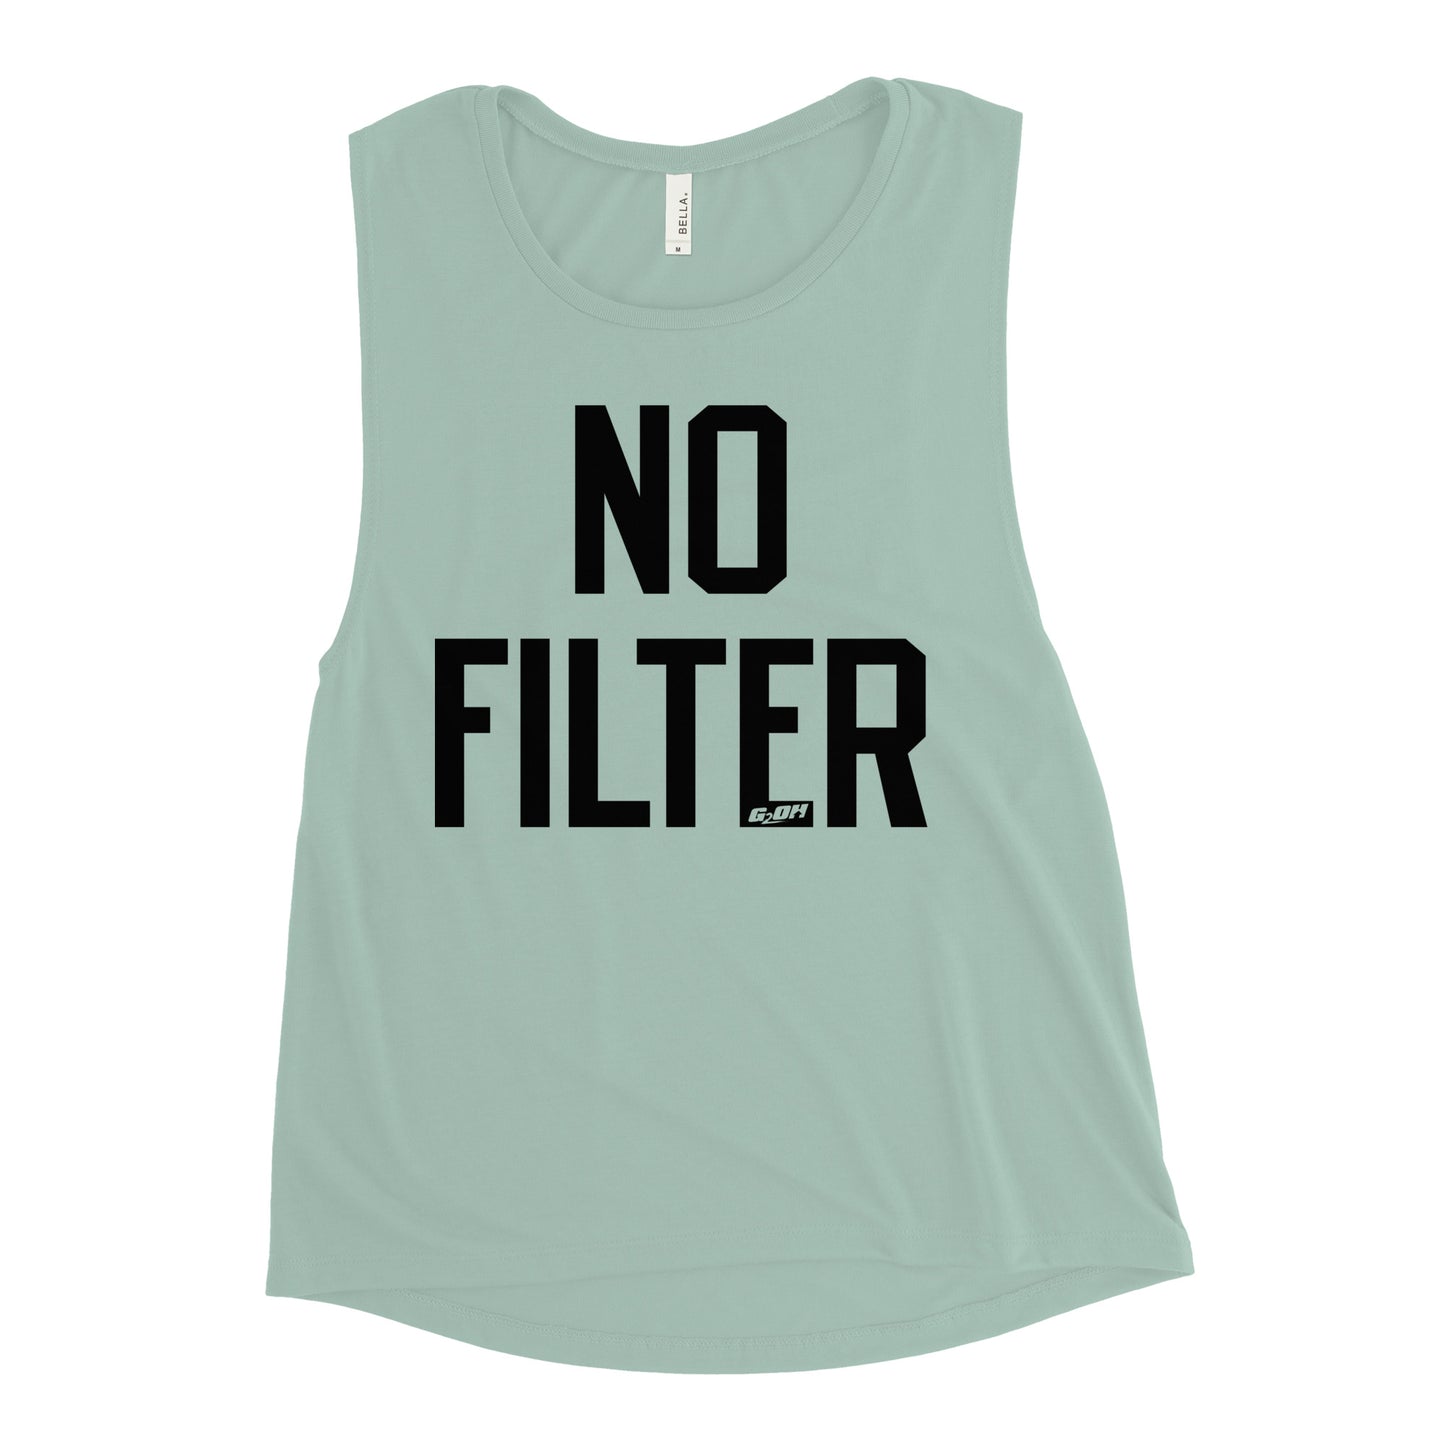 No Filter Women's Muscle Tank